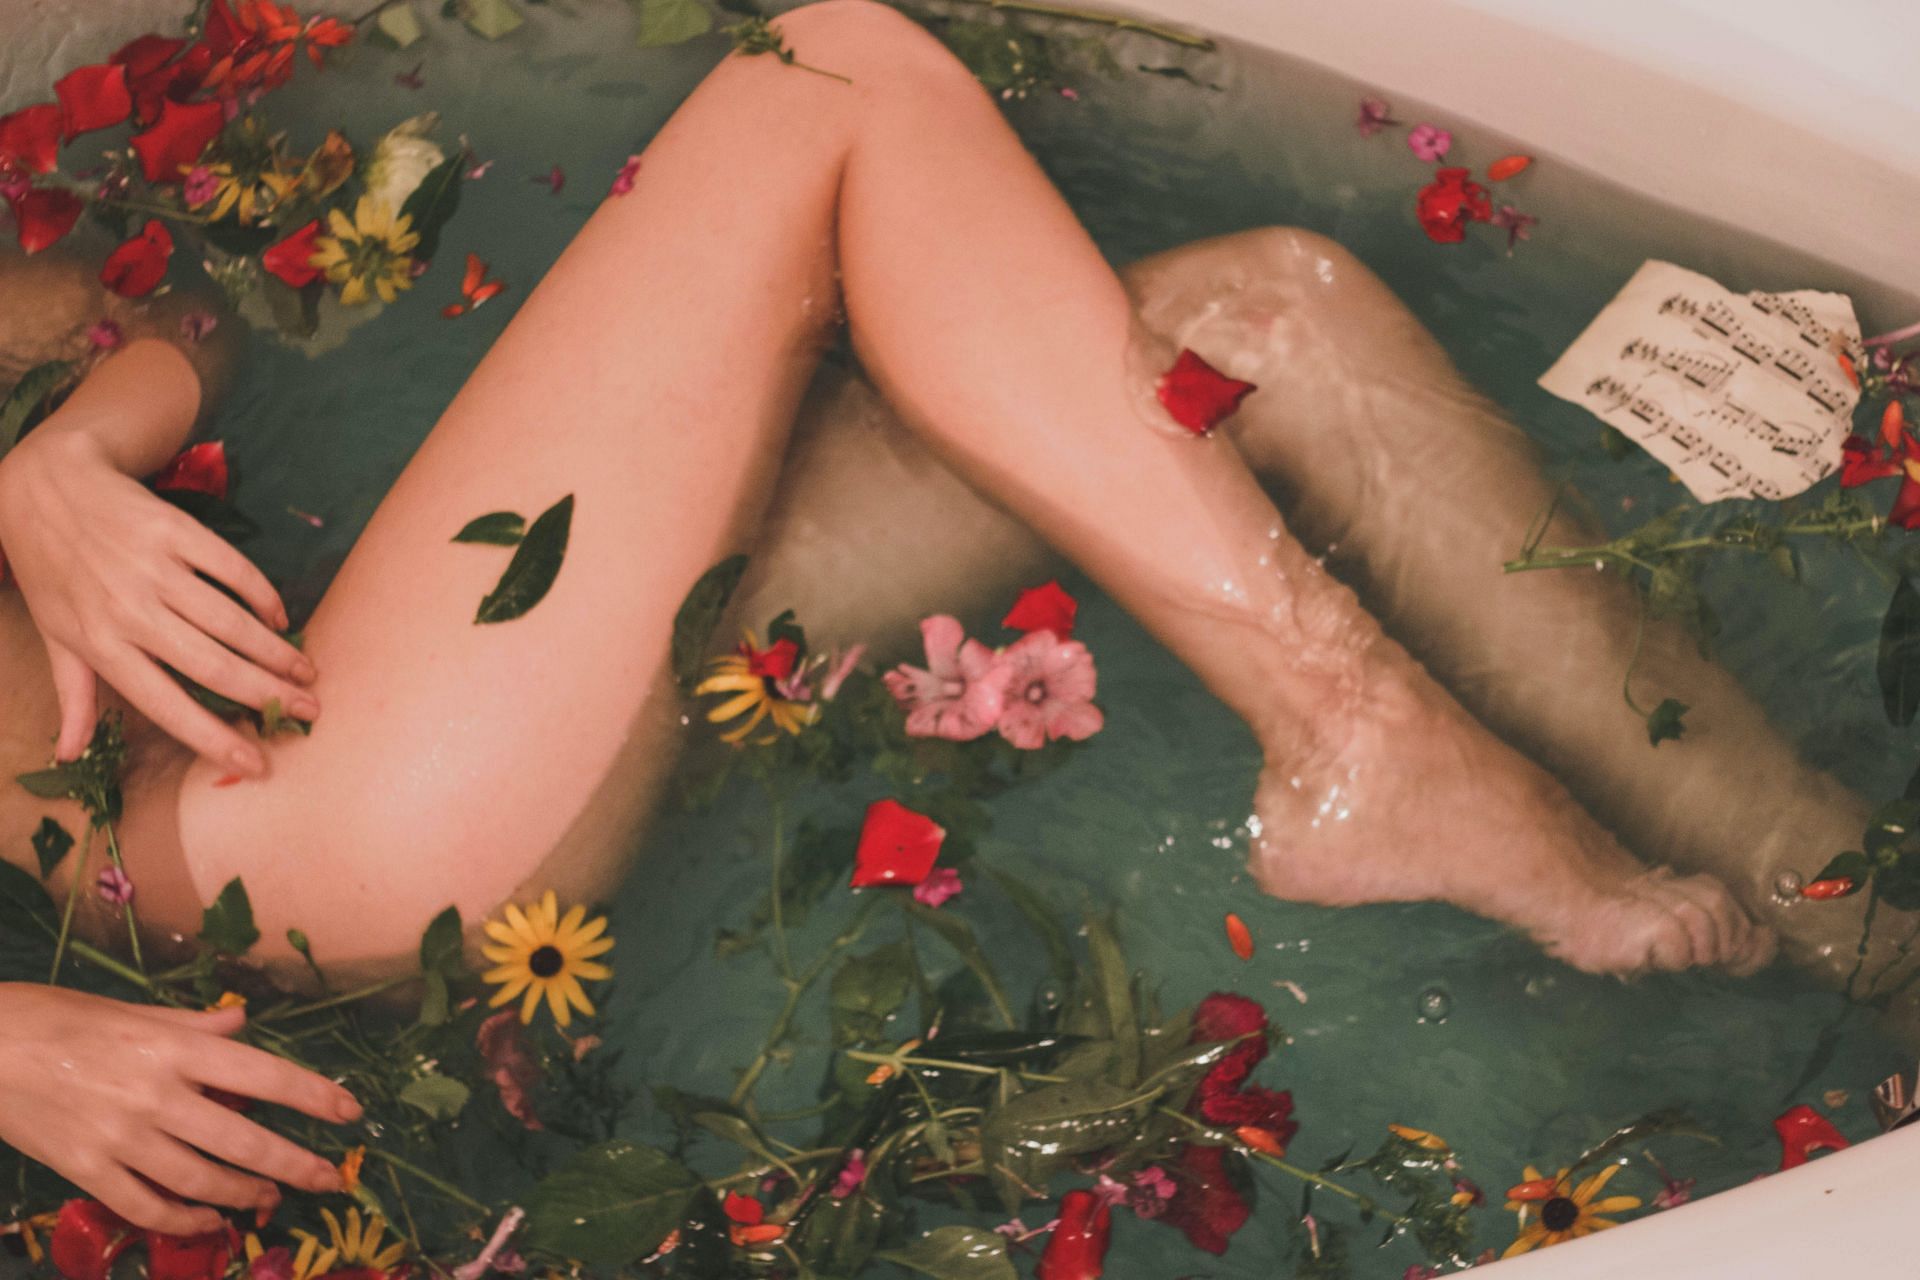 Sitz bath has magical medicial properties(Image by Hanna Postova/Unsplash)